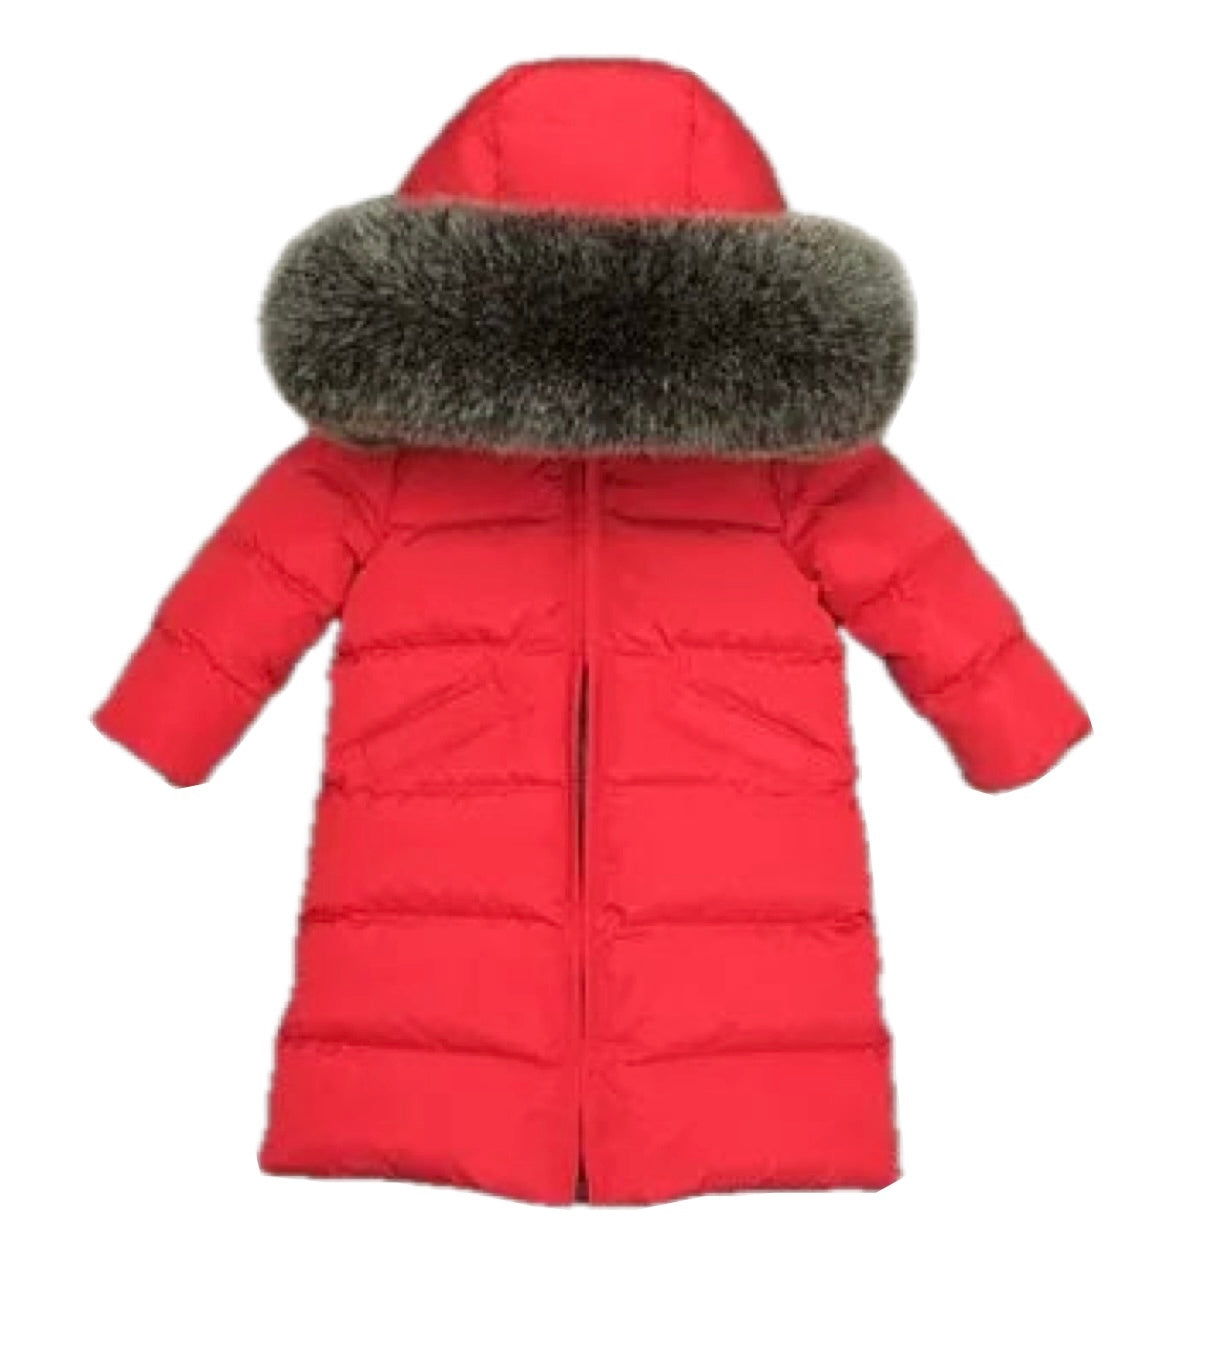 Girls Long Length Red Coat with Black Fox Fur